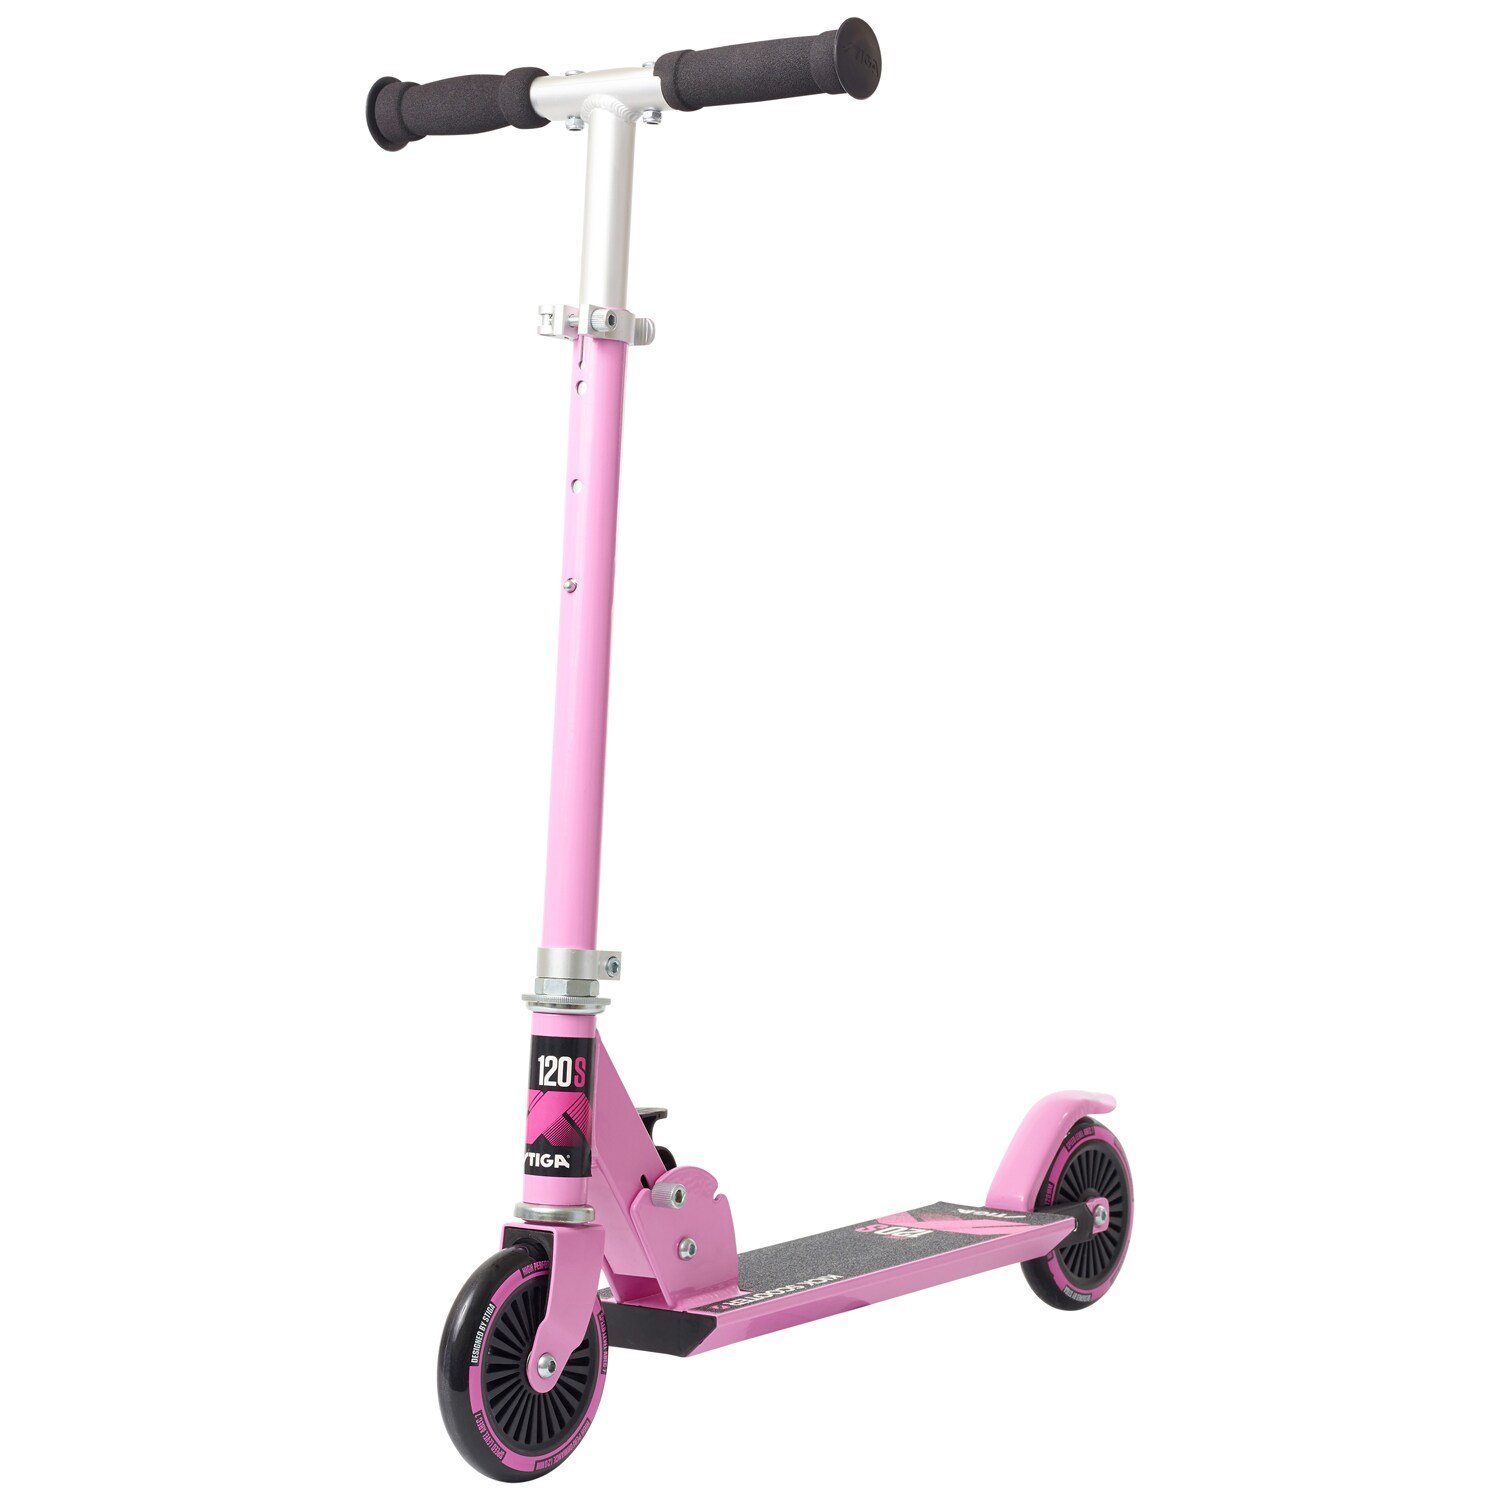 Stiga - Kick Scooter COMET 120-S - Pink (80-7422-07)